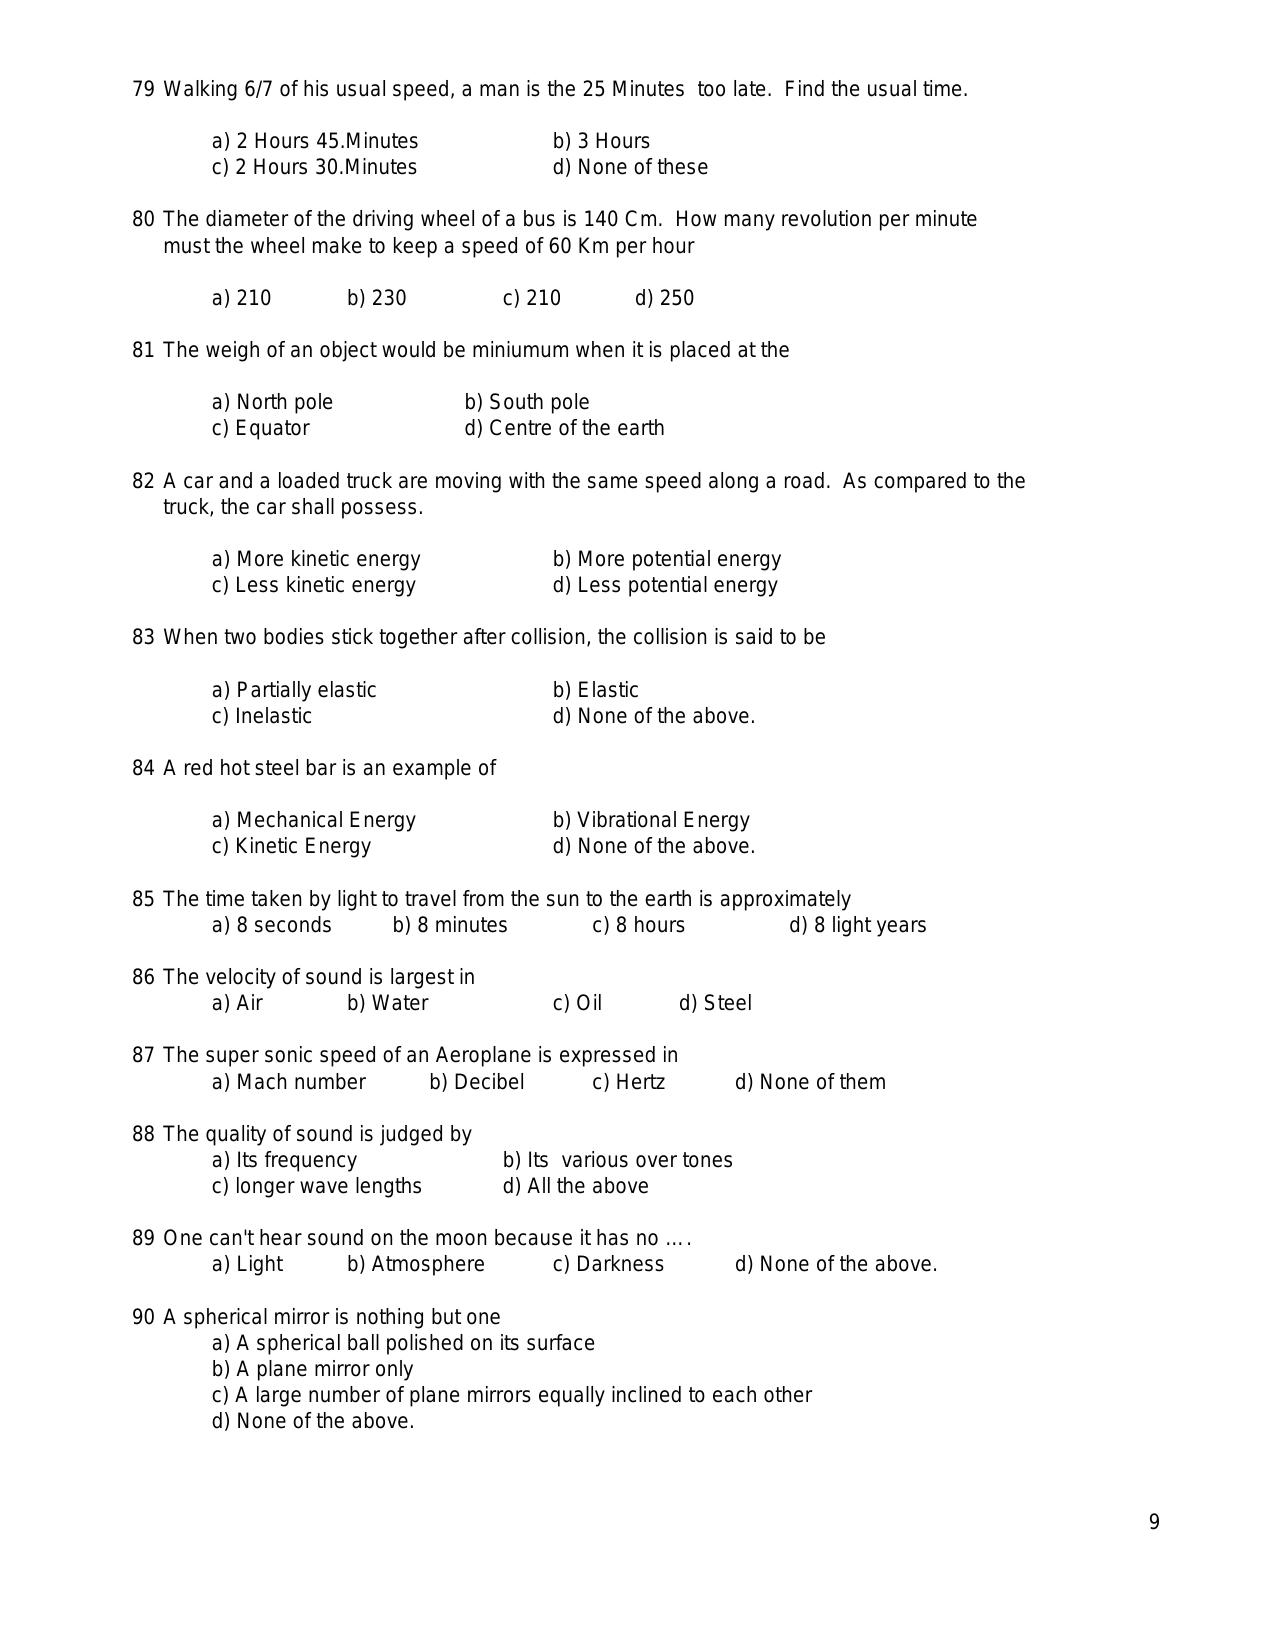 SEBI Officer Quantitative Aptitude Sample Paper - Page 9